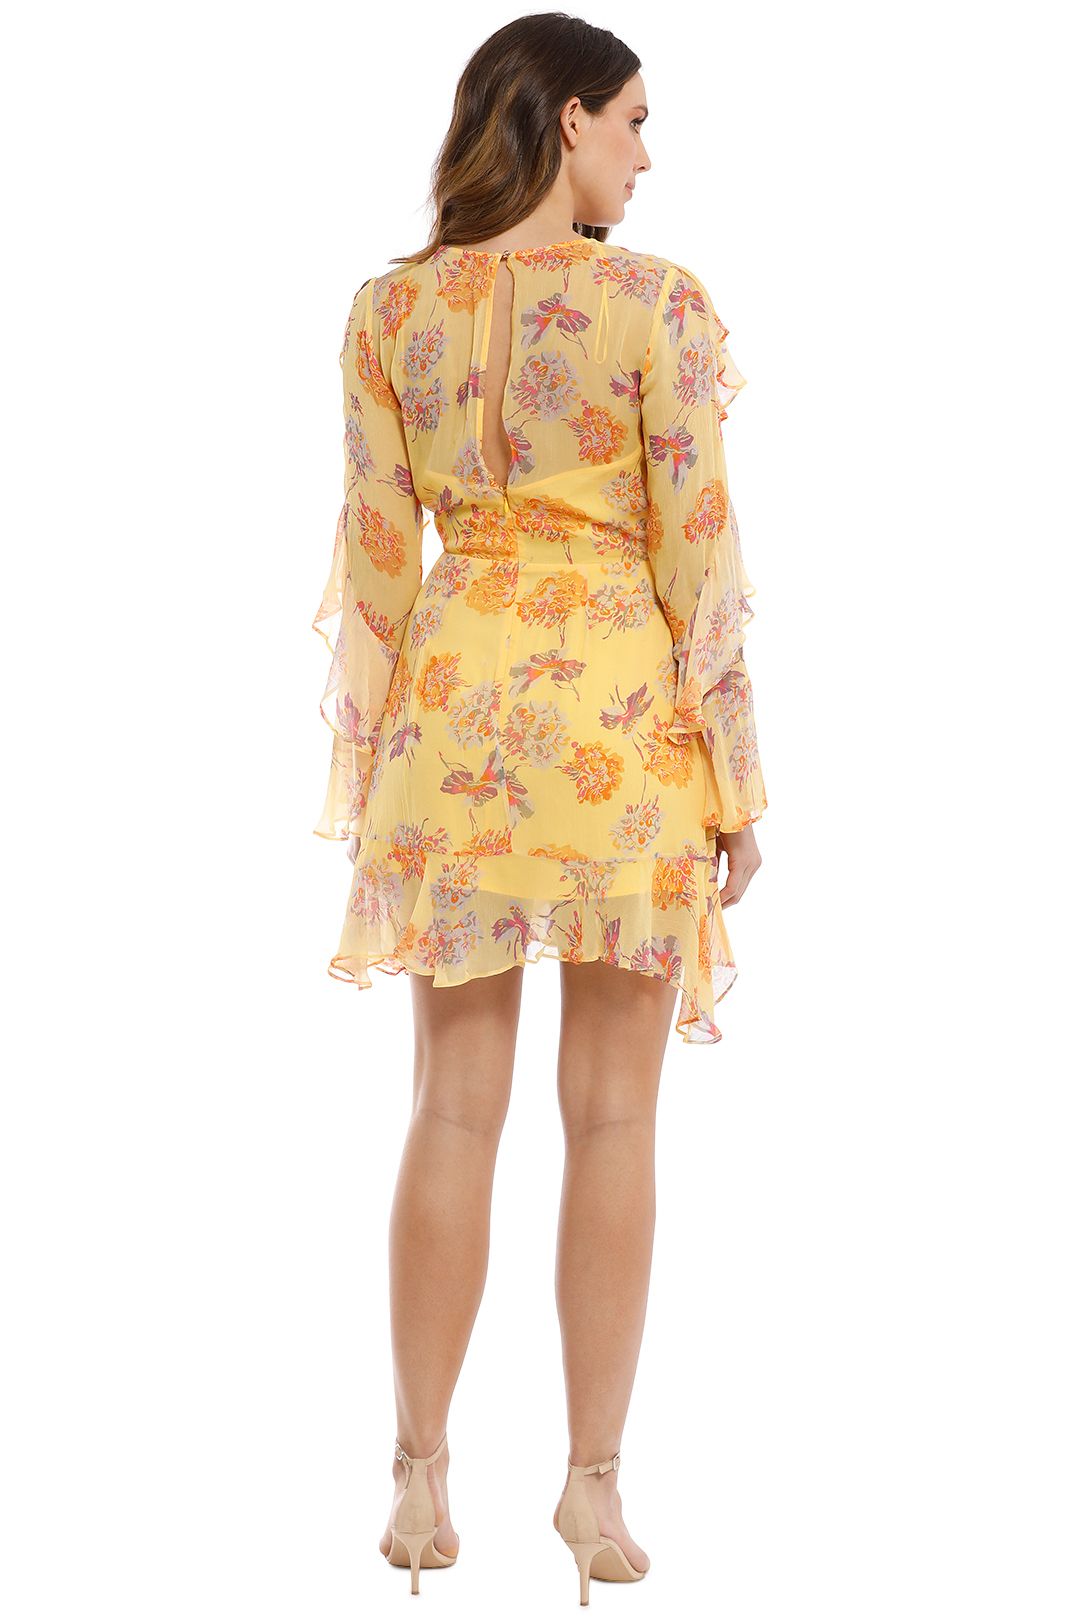 Talulah - Cerulean Mini Dress - Yellow Vintage Floral - Back